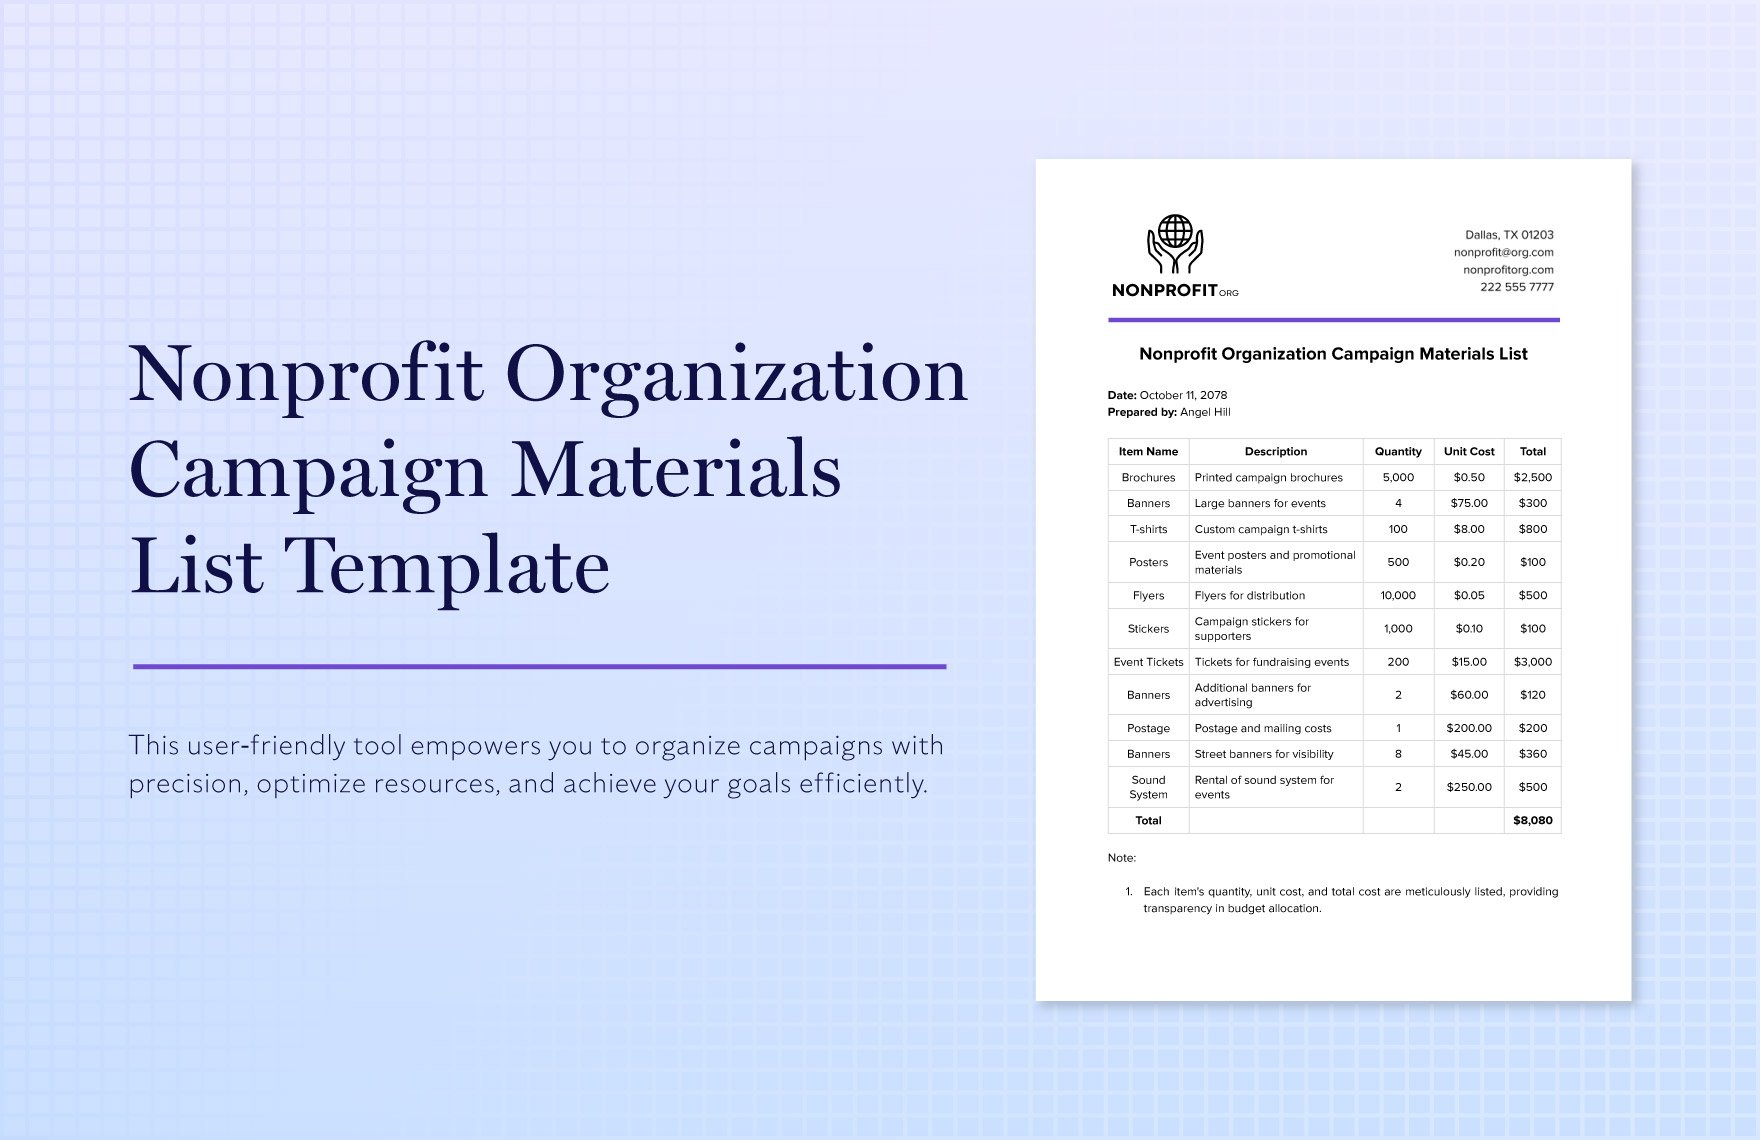 Nonprofit Organization Campaign Materials List Template in Word, Google Docs, PDF